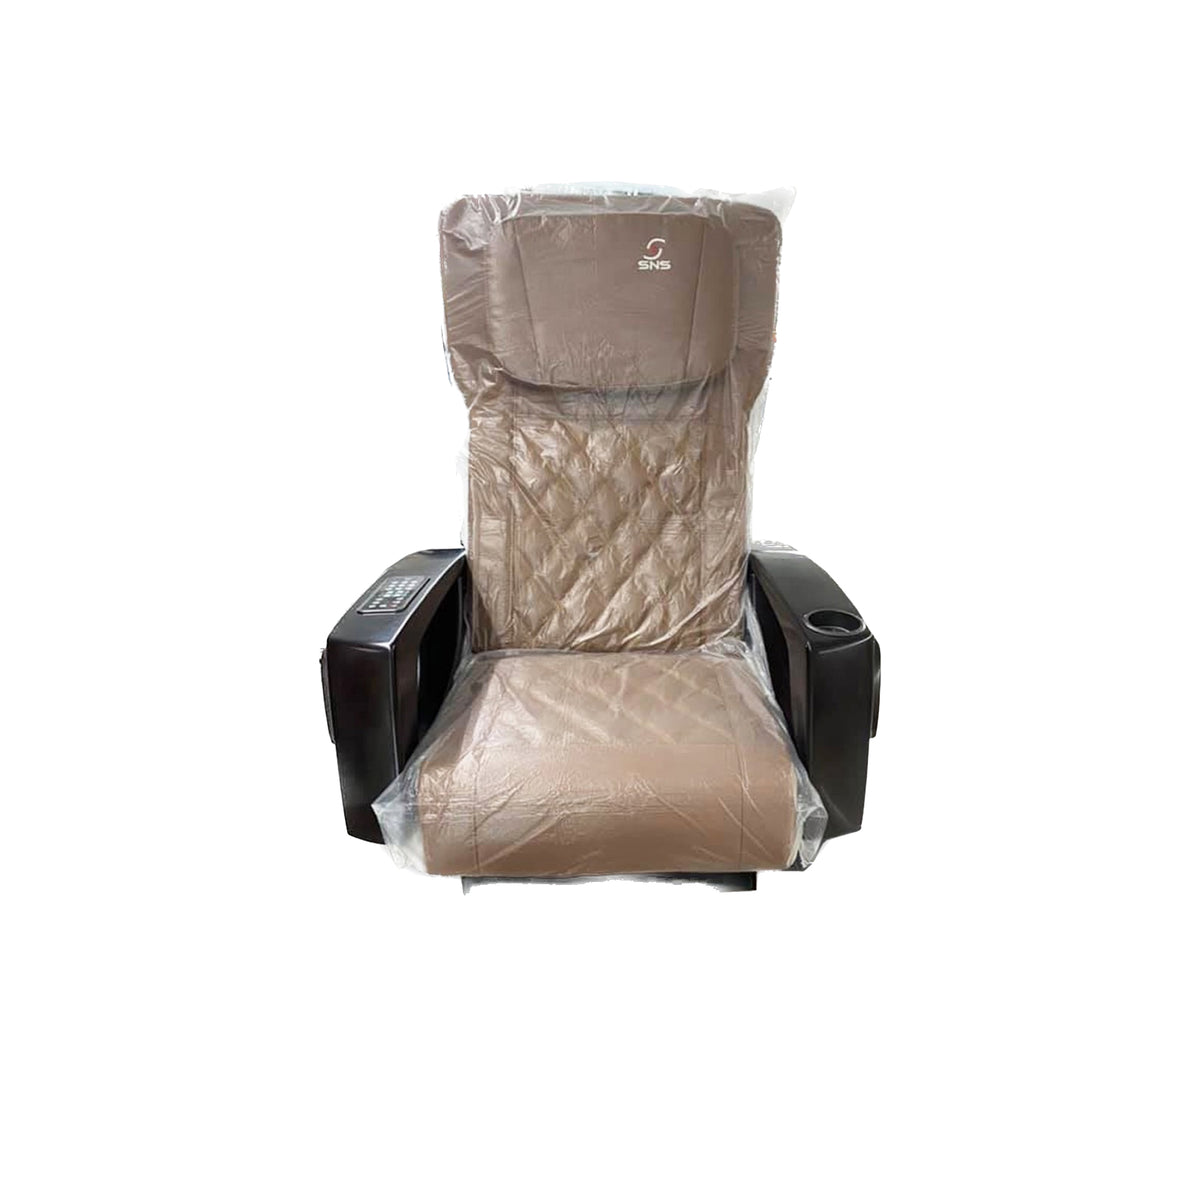 Spa Chair Plastic Cover 1 box 1000 pcs